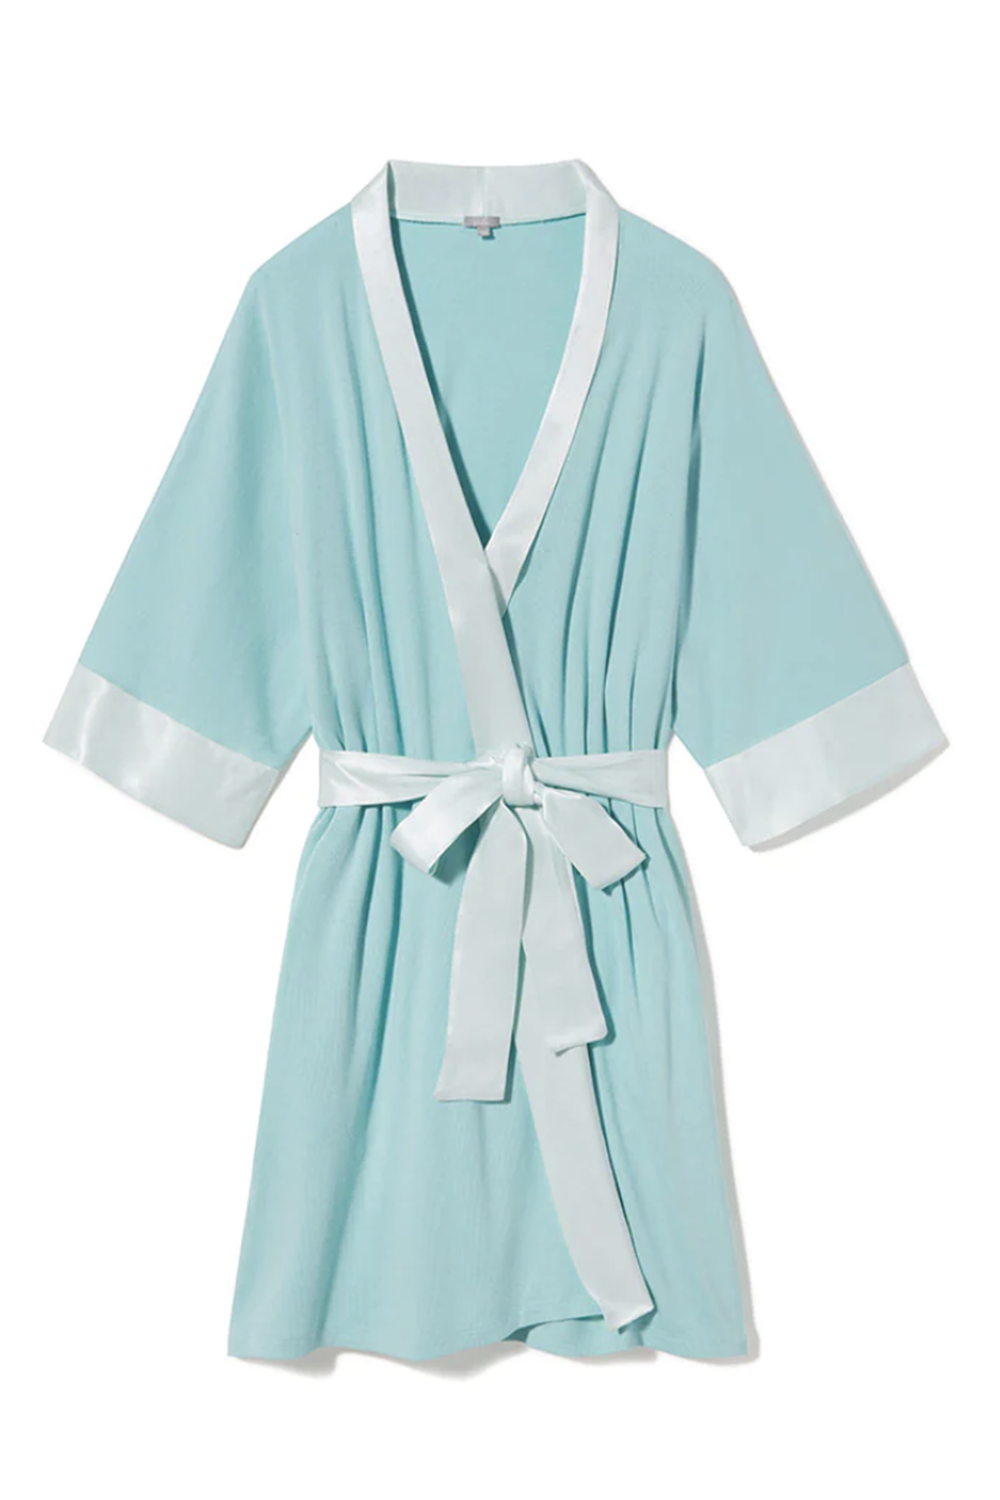 Shala Kimono Robe - Aqua